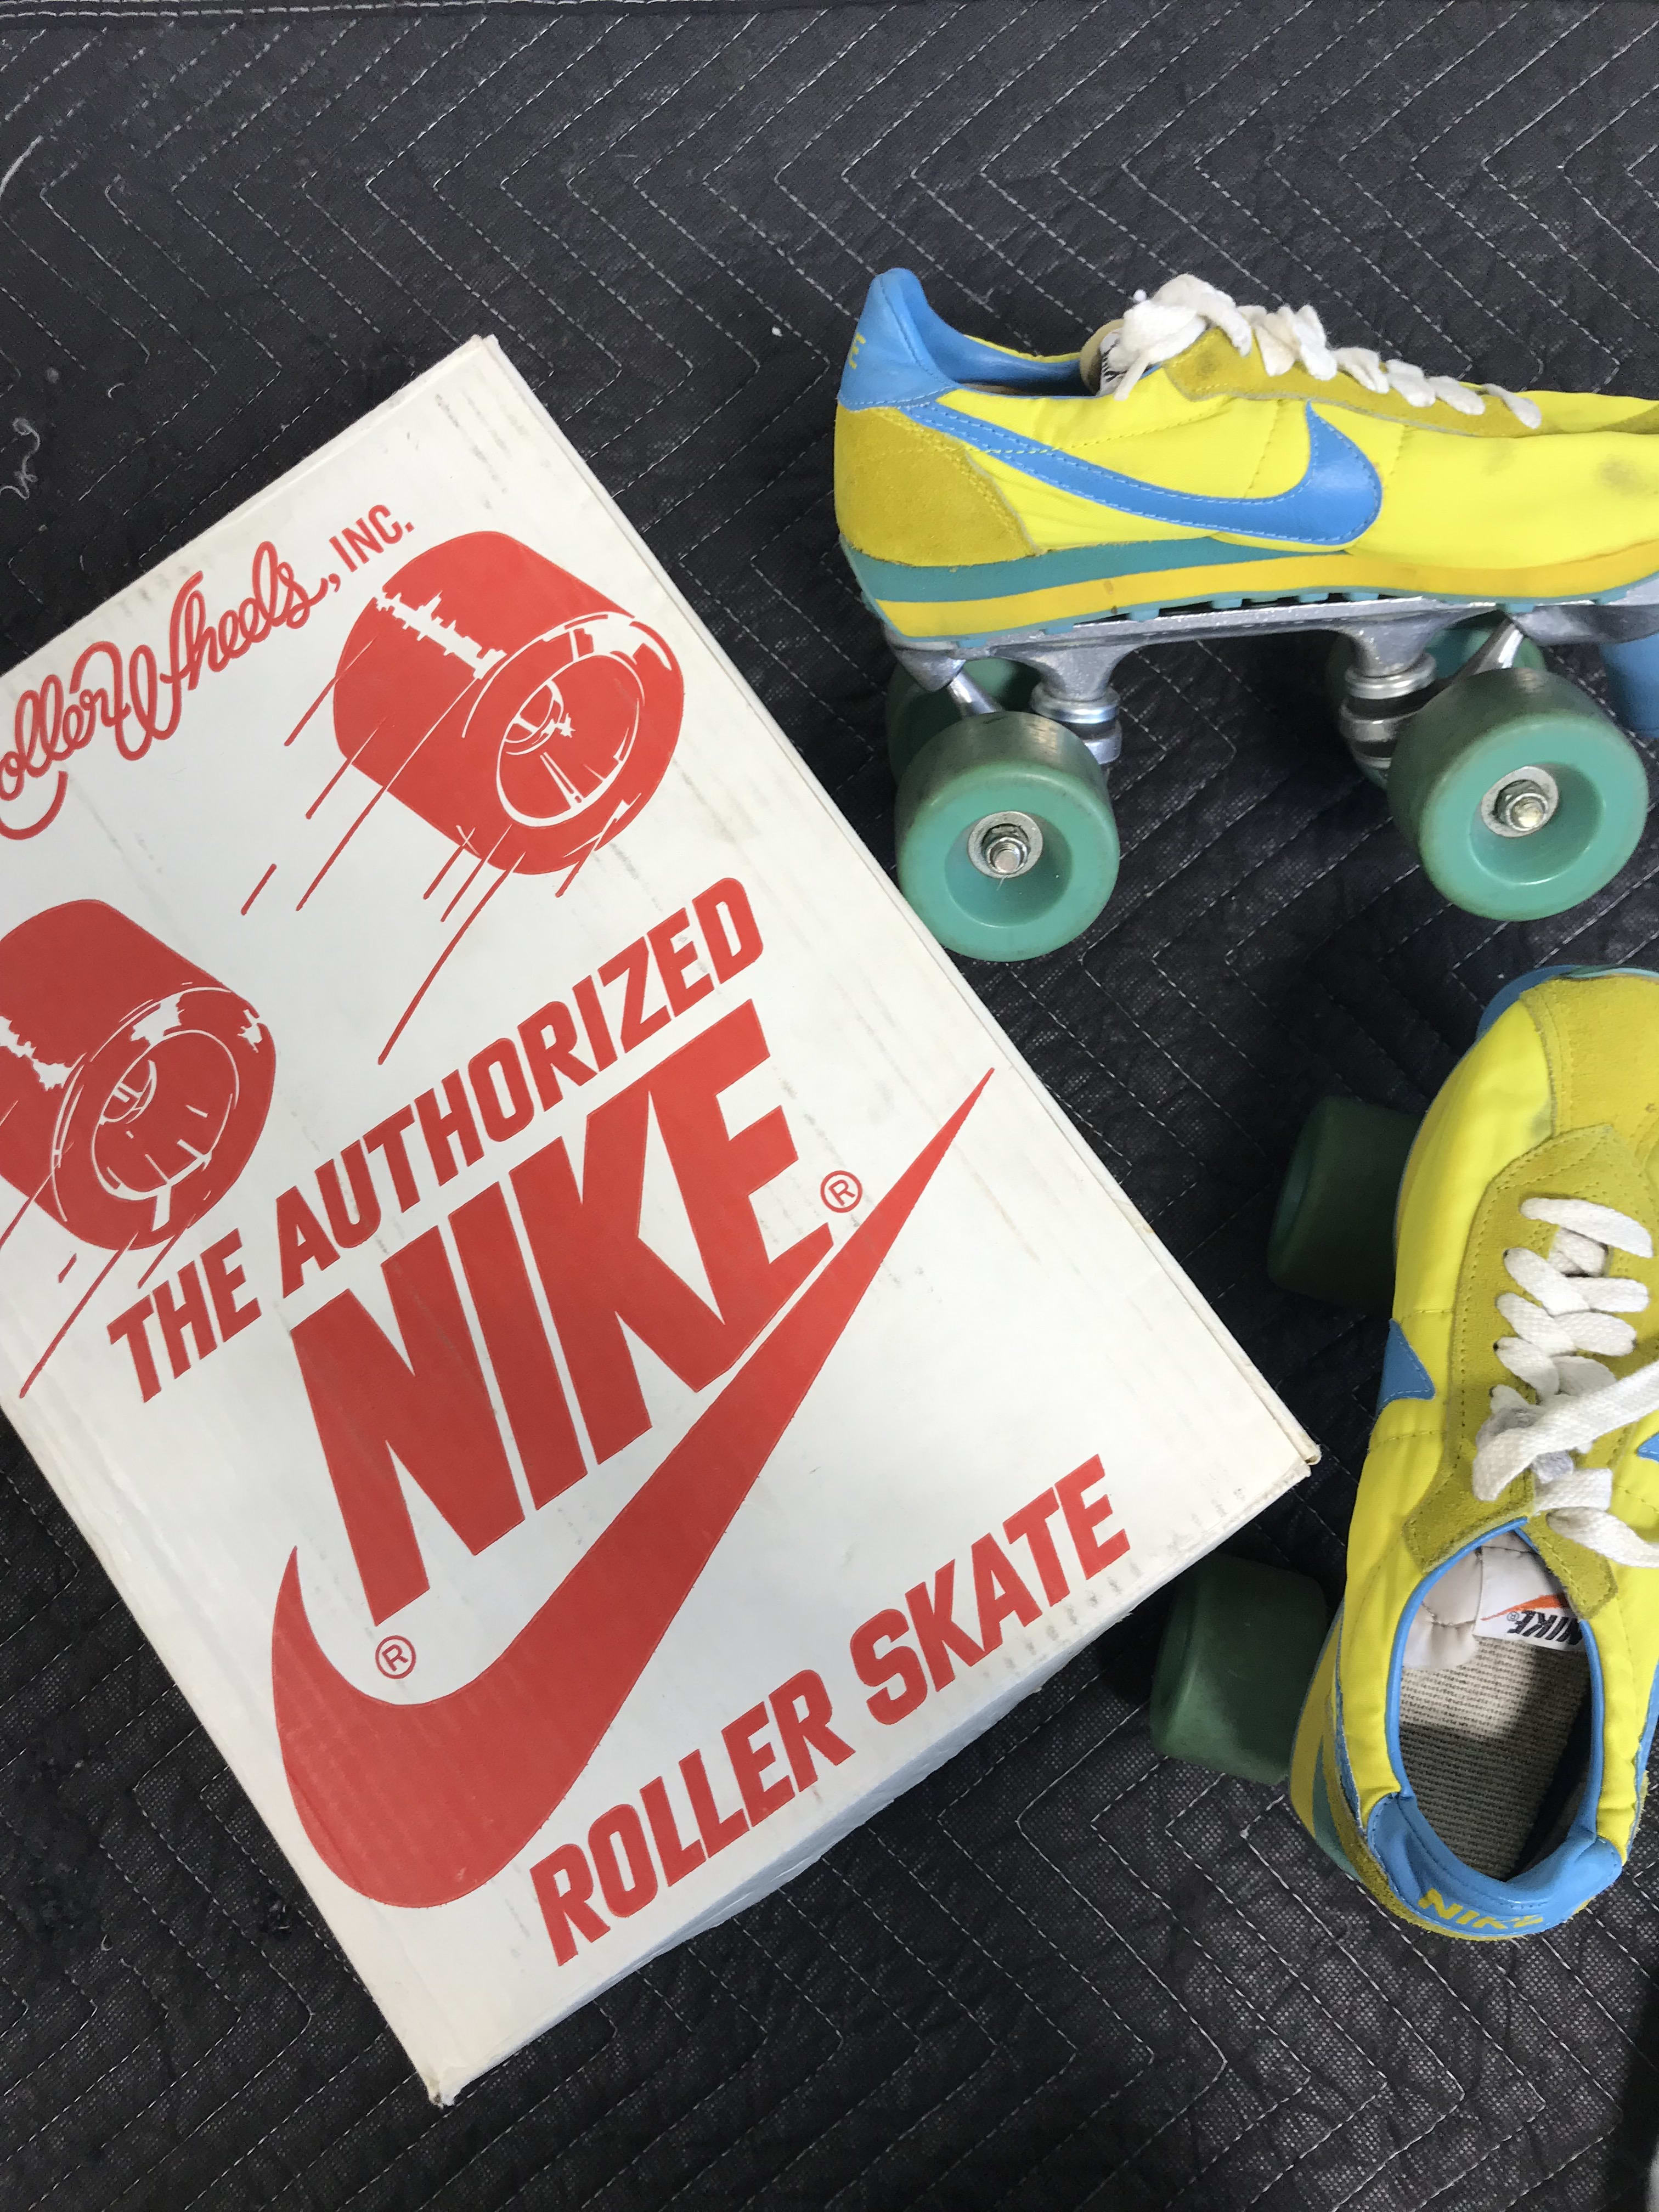 cortez roller skates